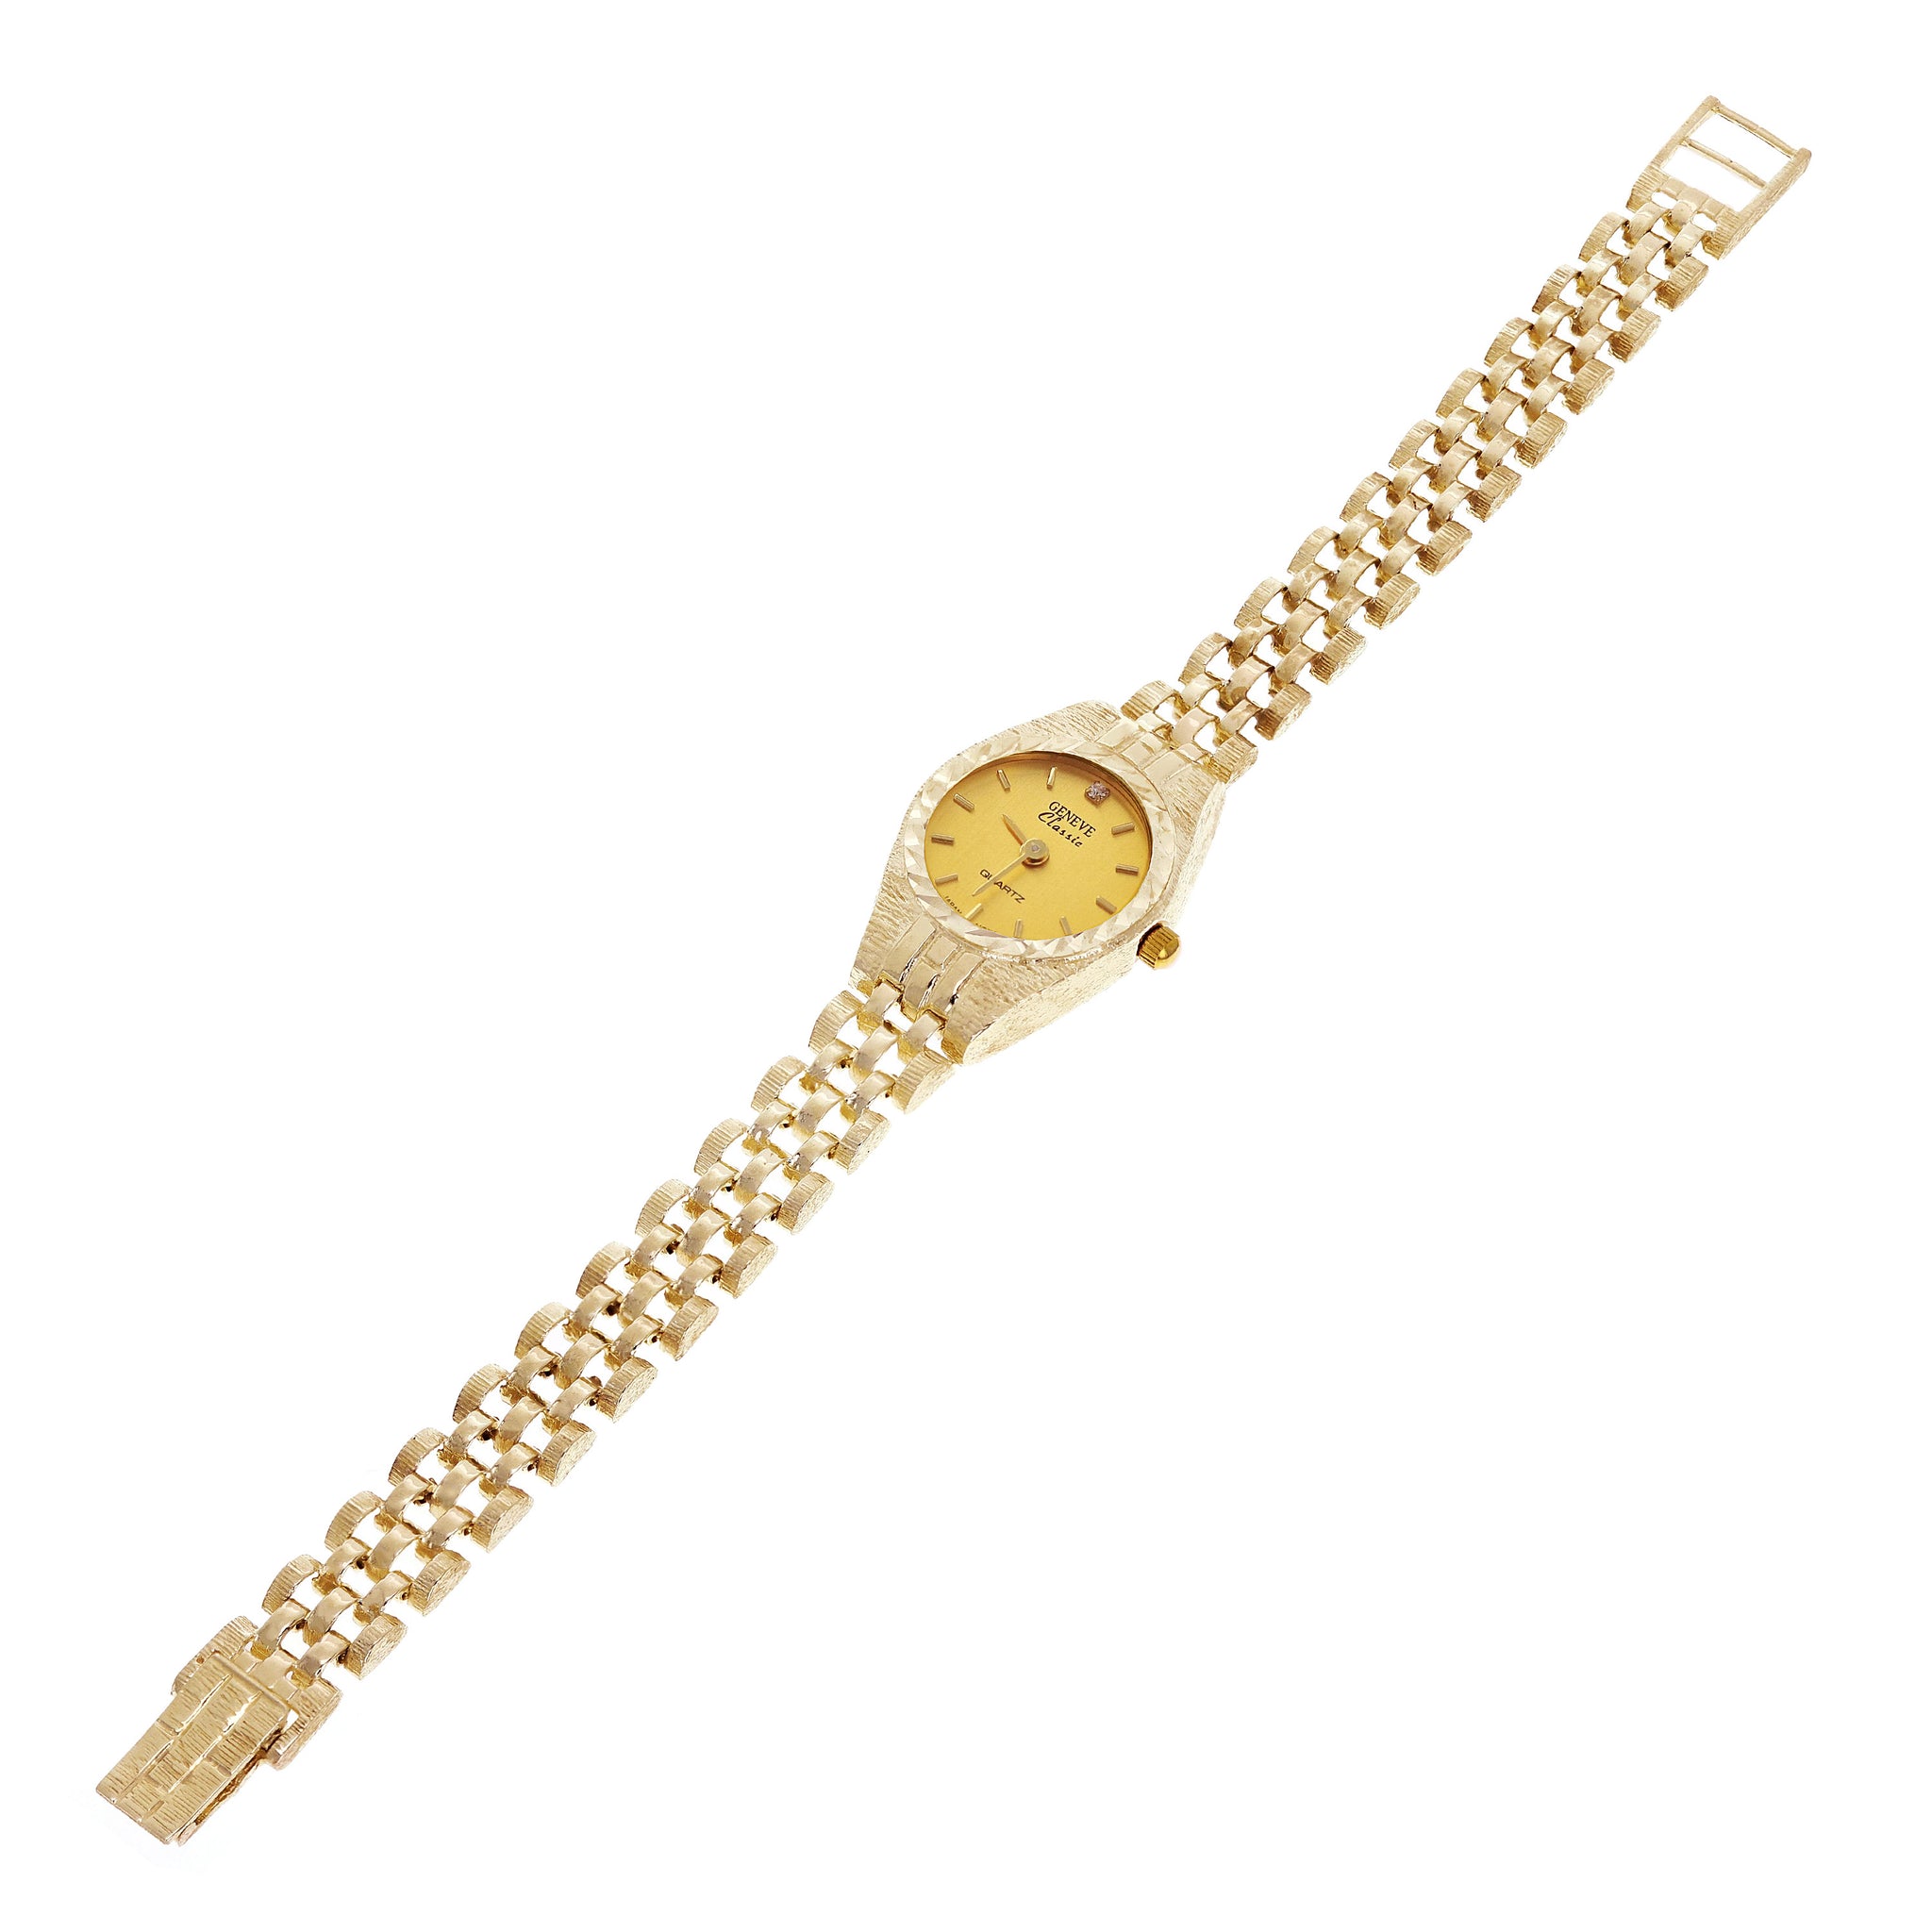 Women's 10k Yellow Gold Watch Link Geneve Diamond Wrist Watch 6-8